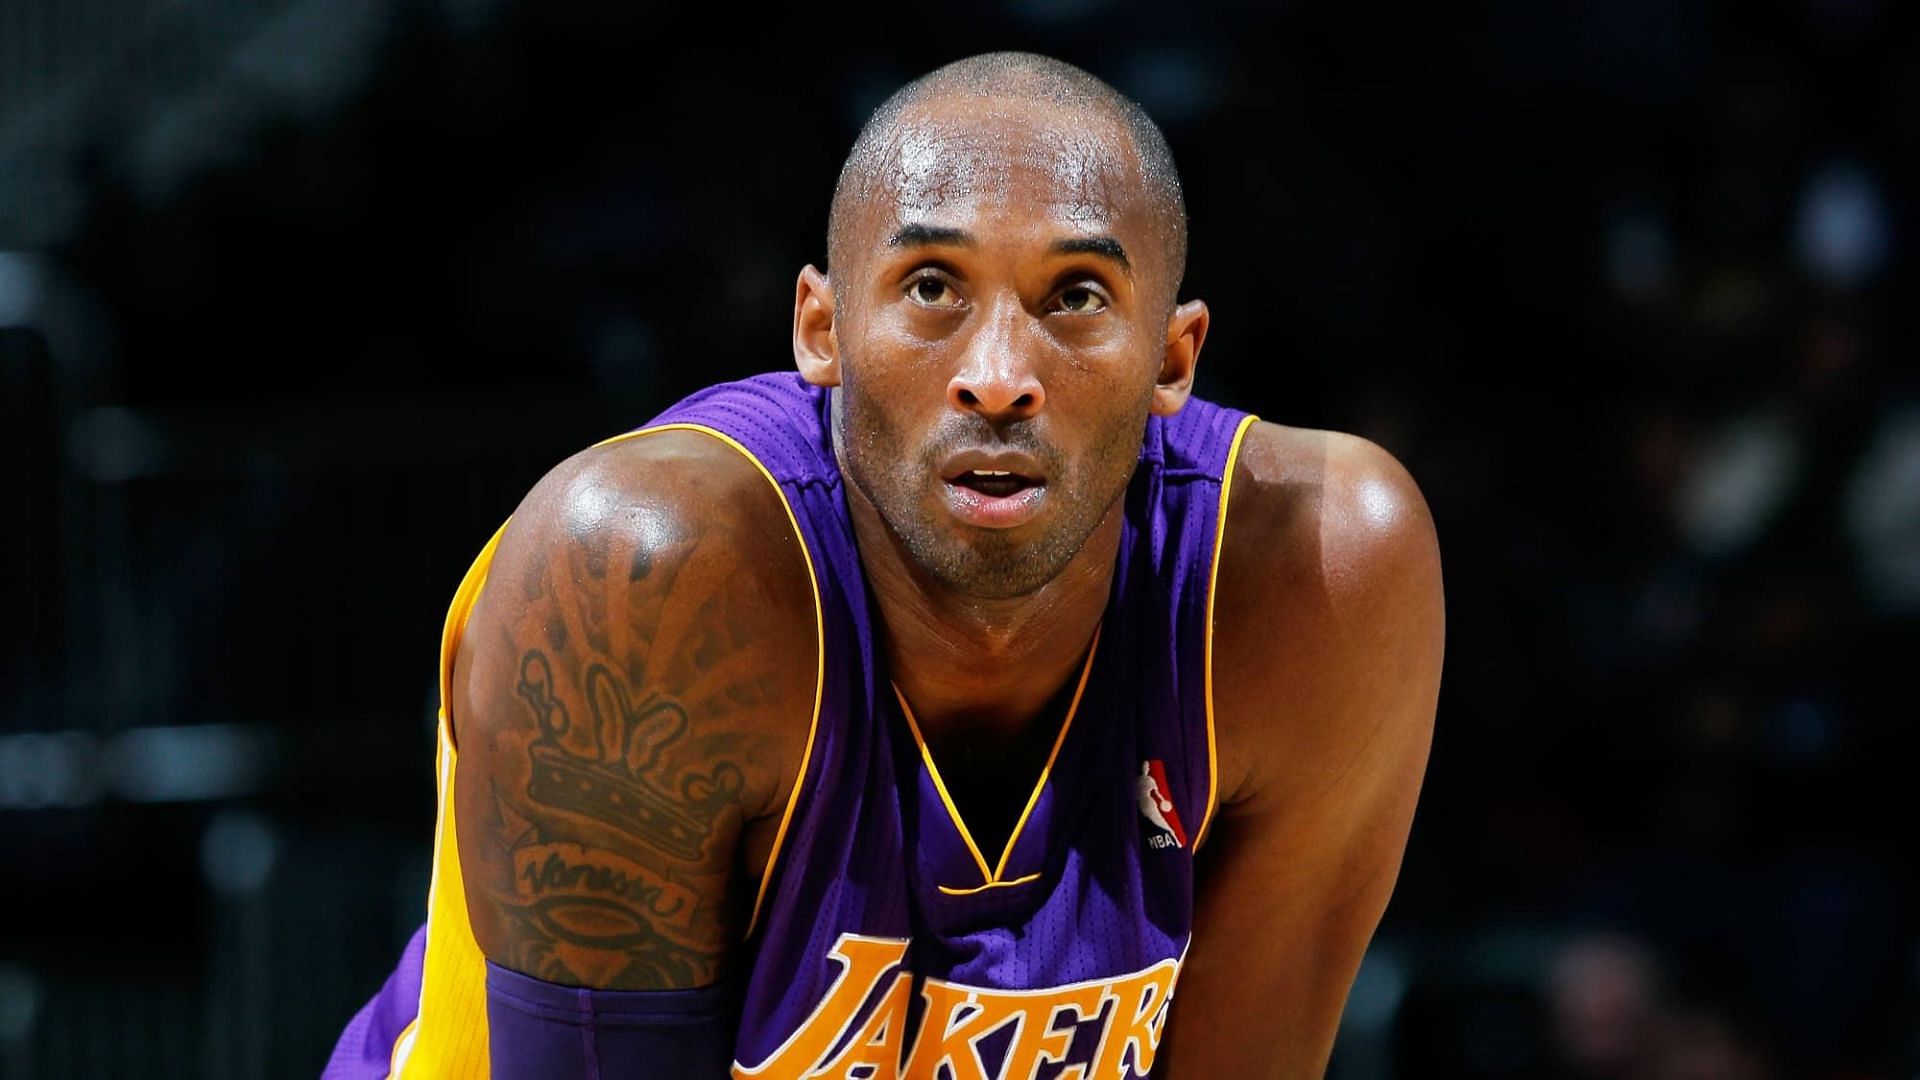 LA Lakers legendary shooting guard Kobe Bryant